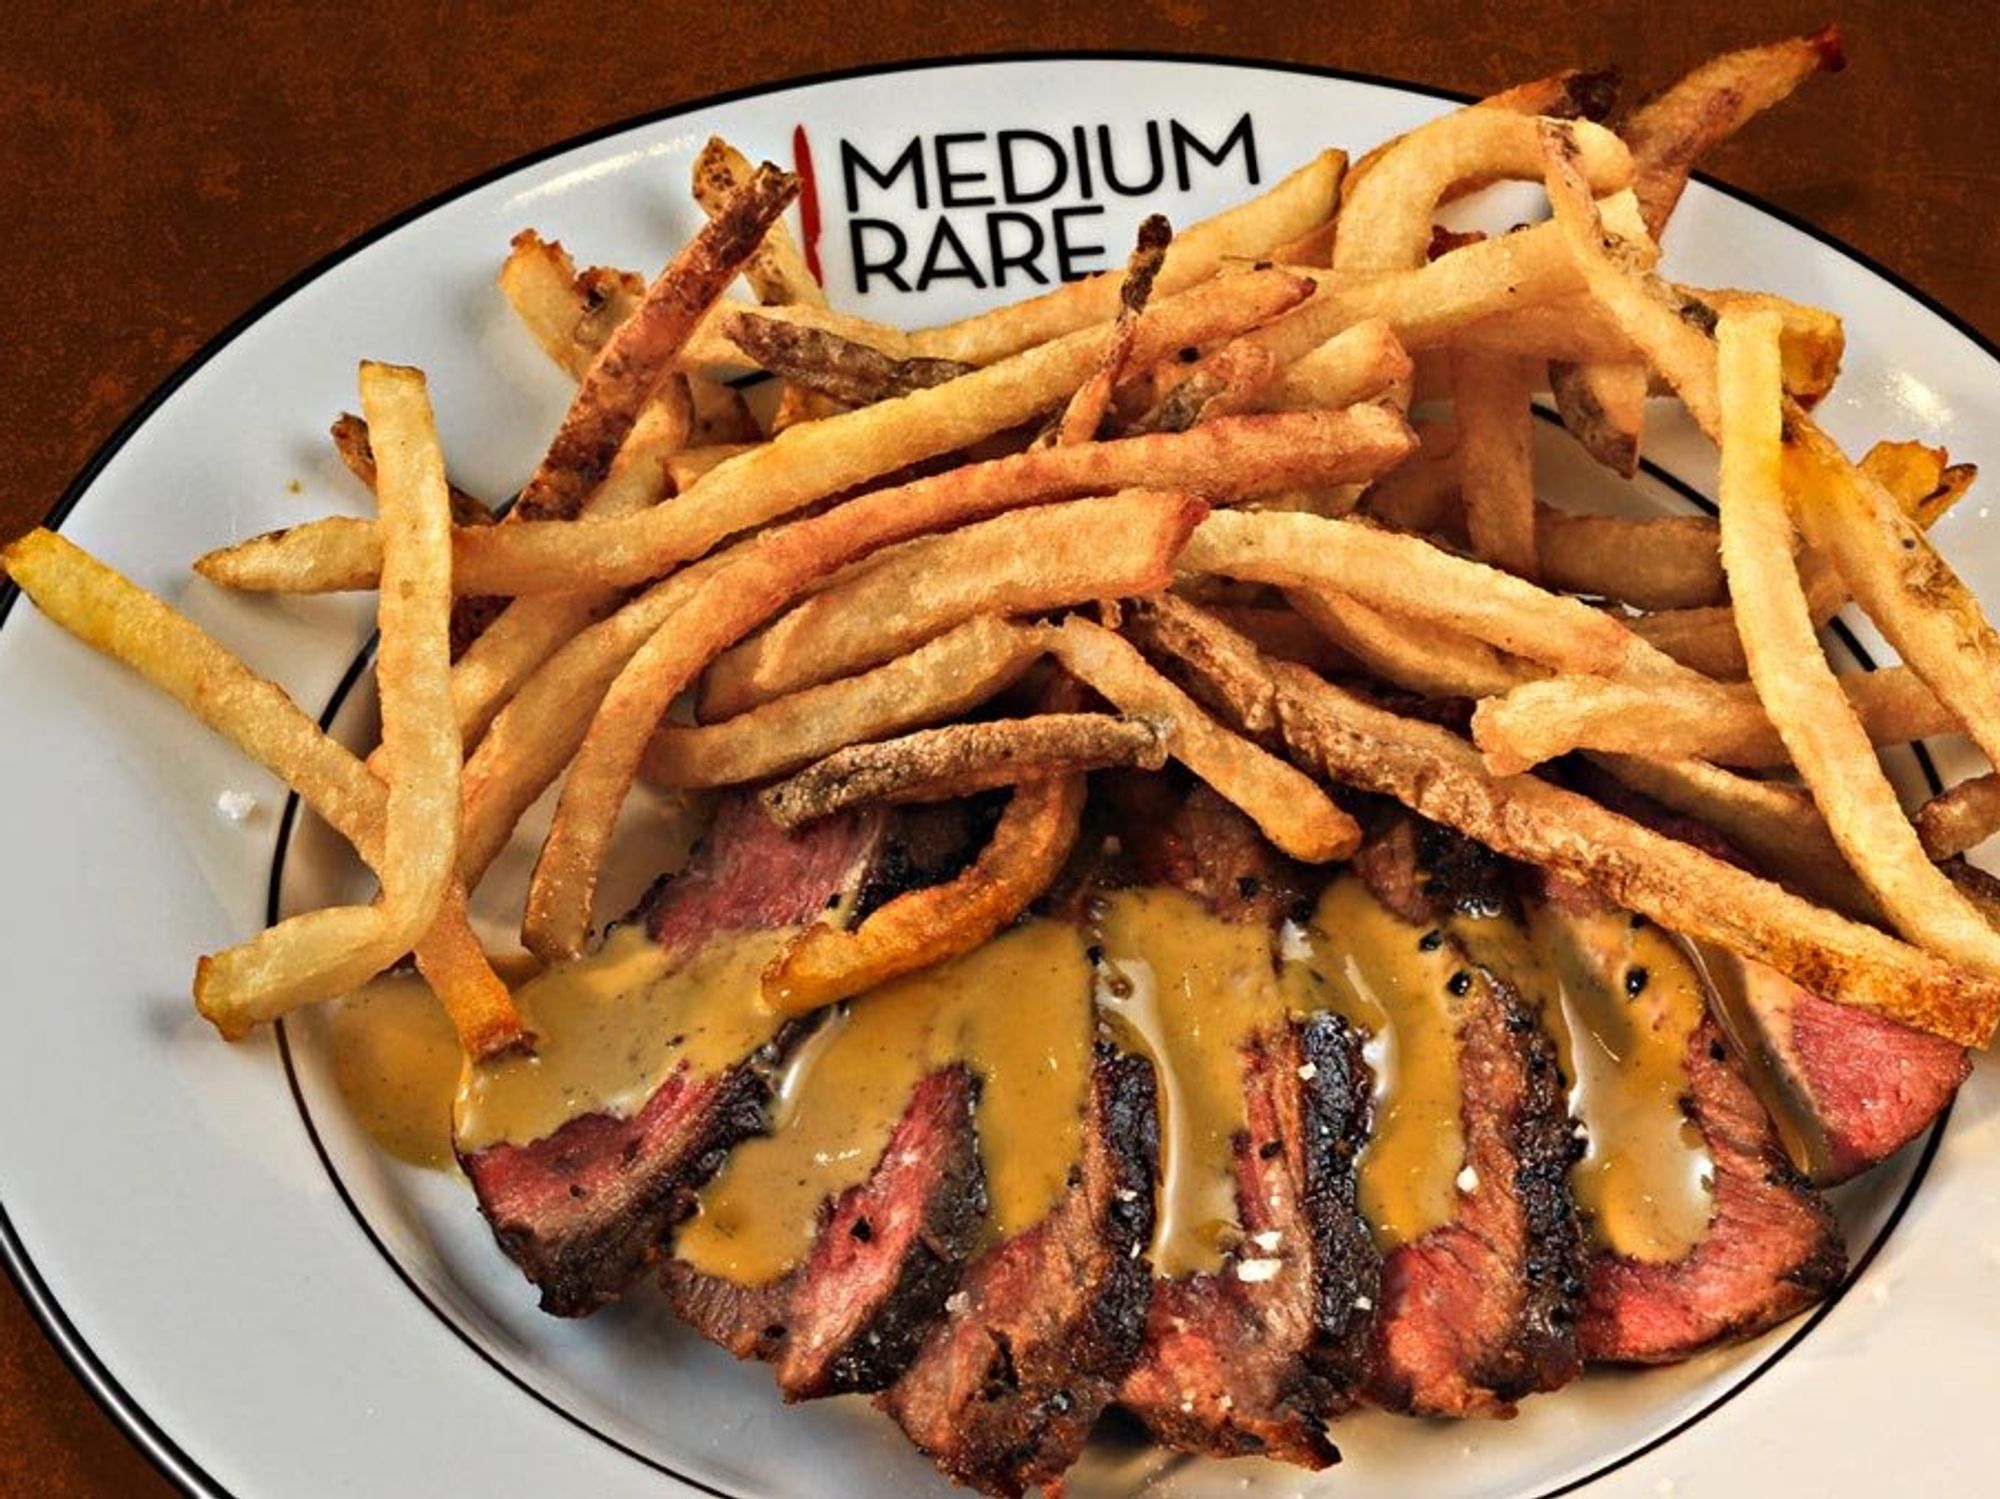 Medium Rare steak dinner